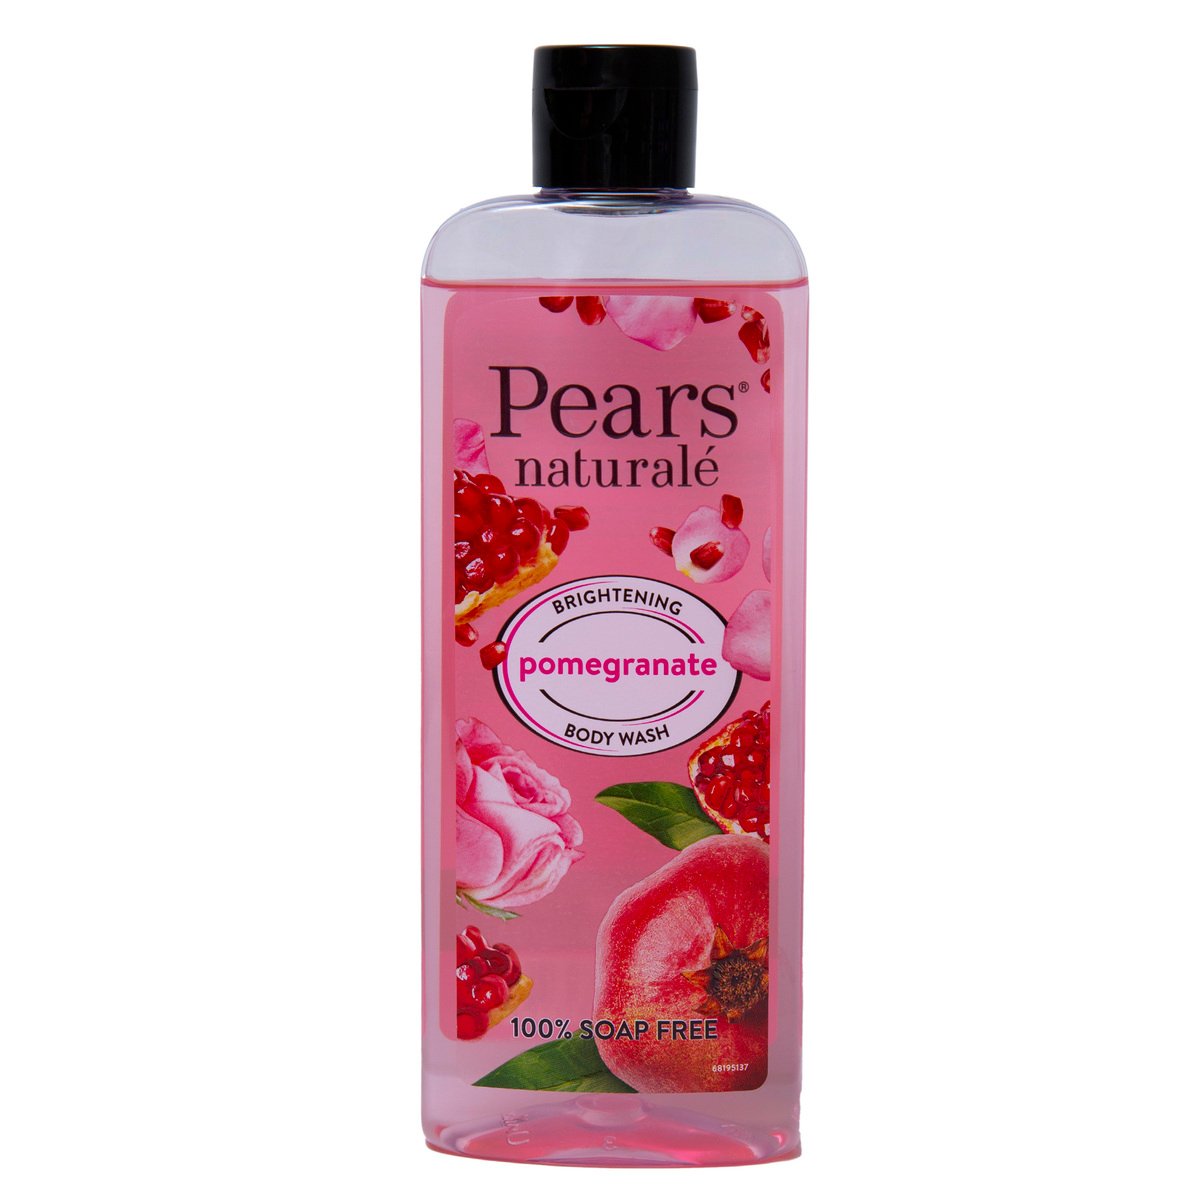 Pears Natural Pomegranate Body Wash, 250 ml